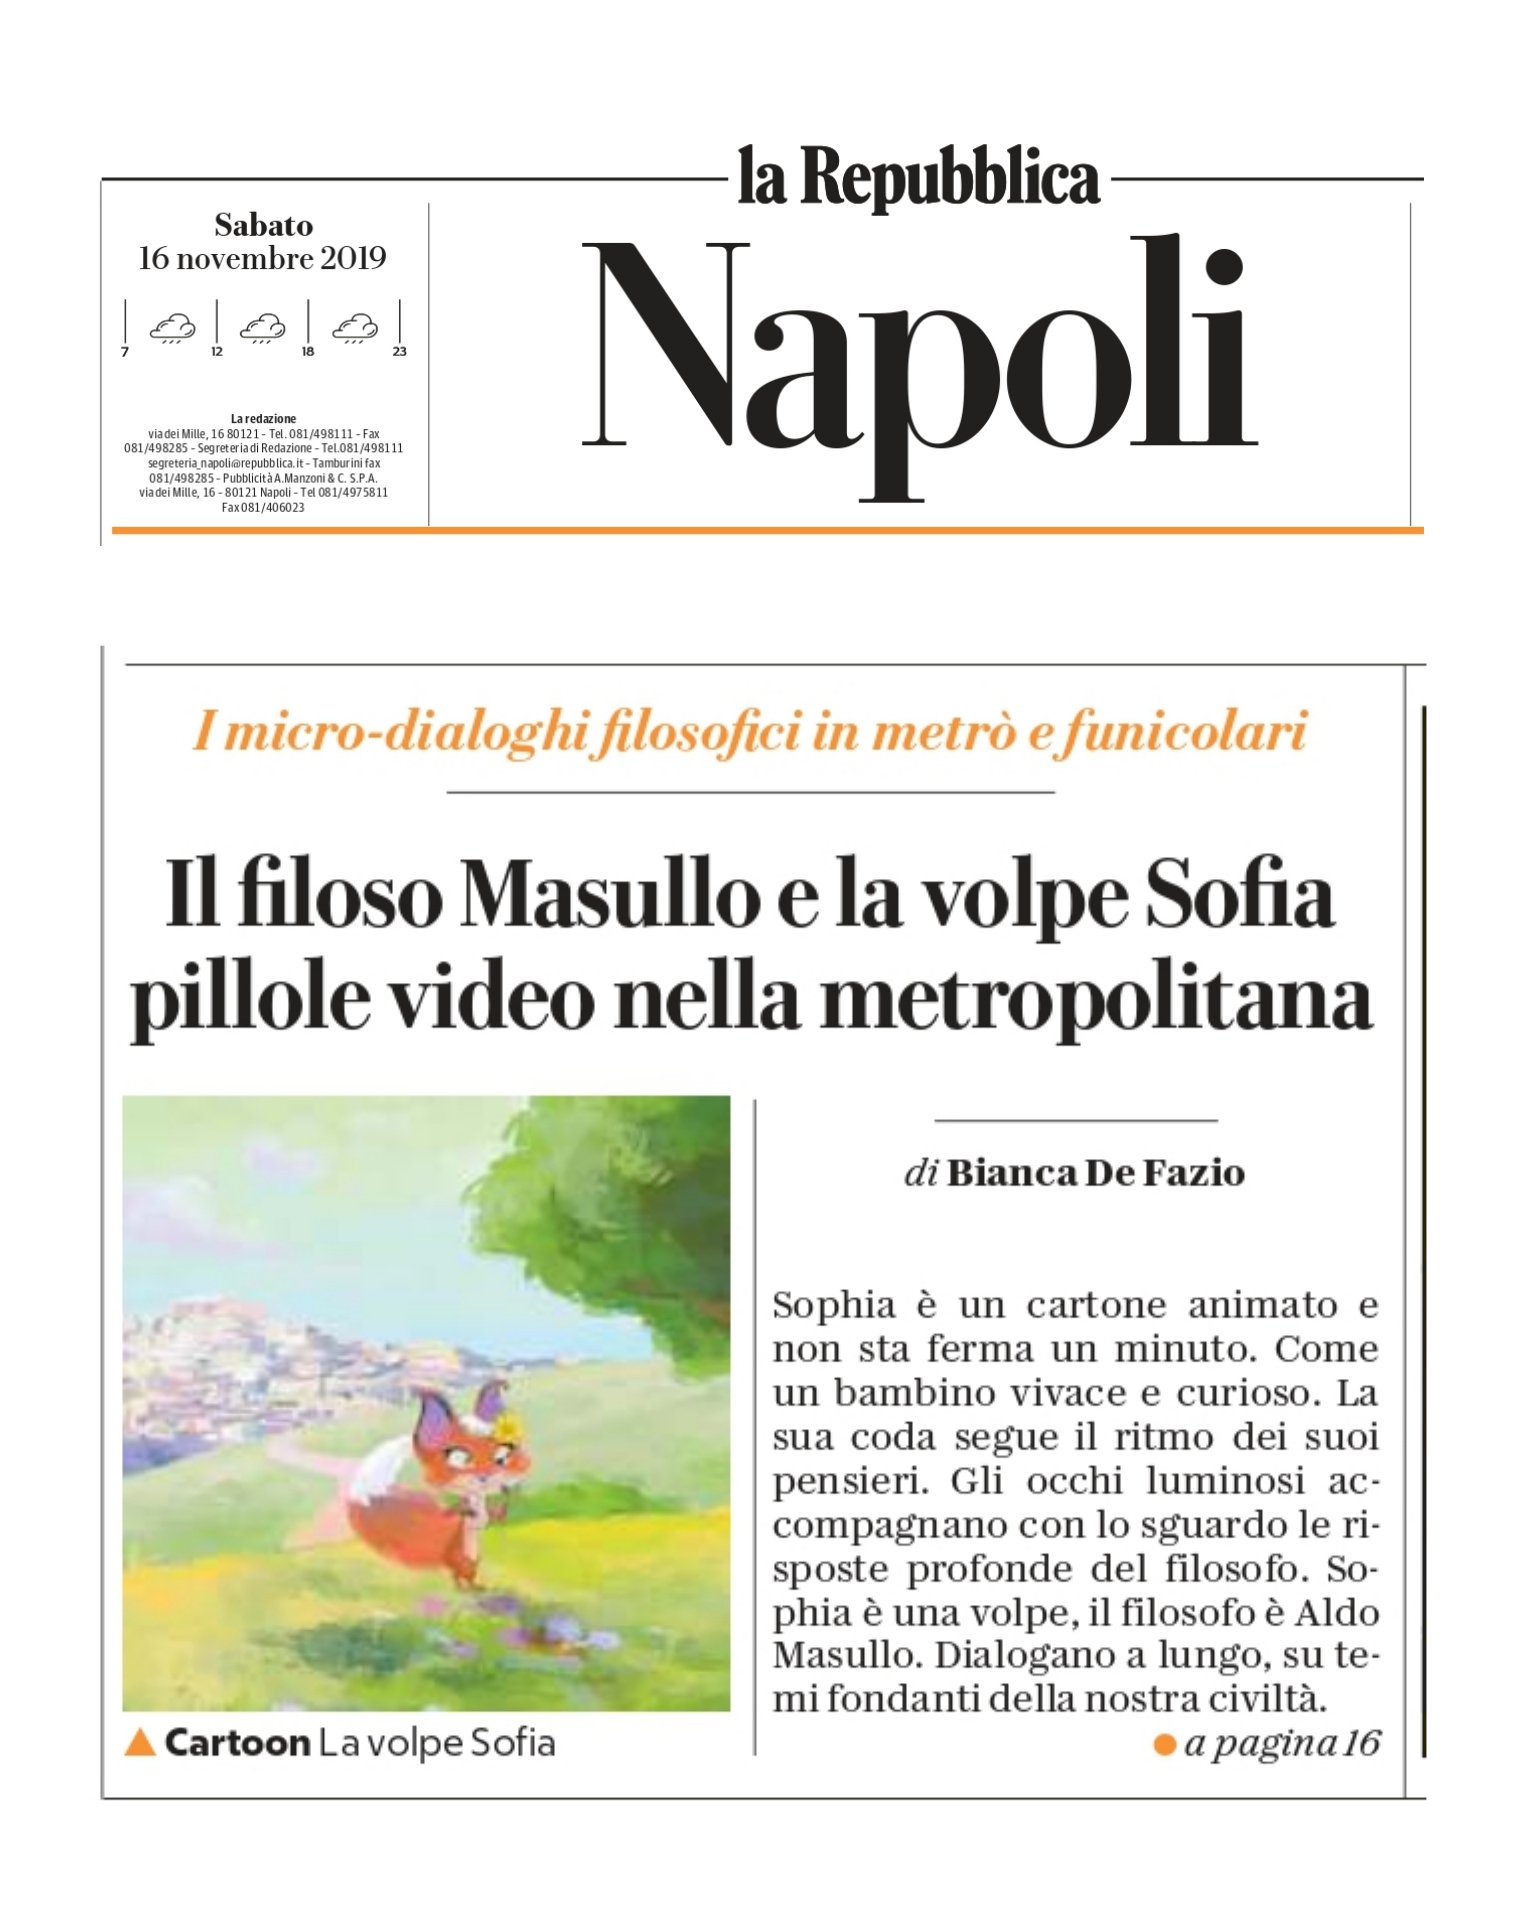 La Repubblica parla de La volpe Sophia 2019